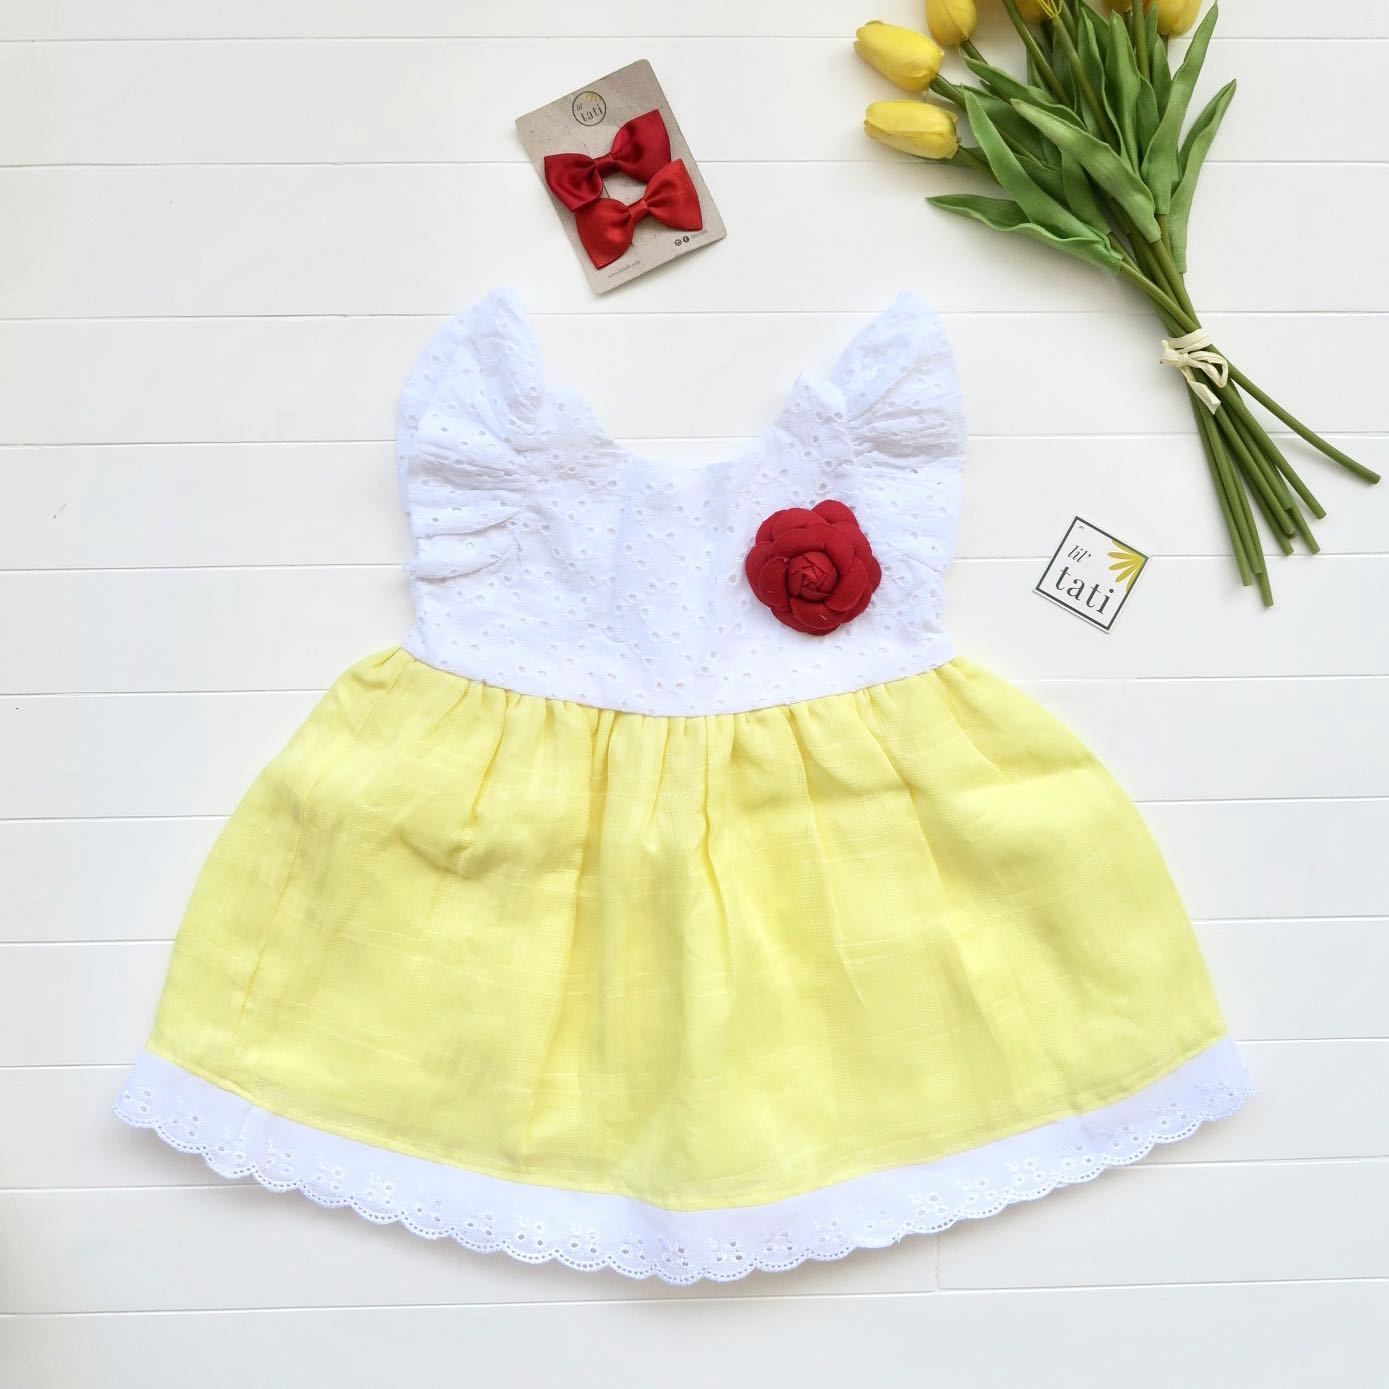 Periwinkle Dress in White Eyelet & Yellow Linen - Lil' Tati